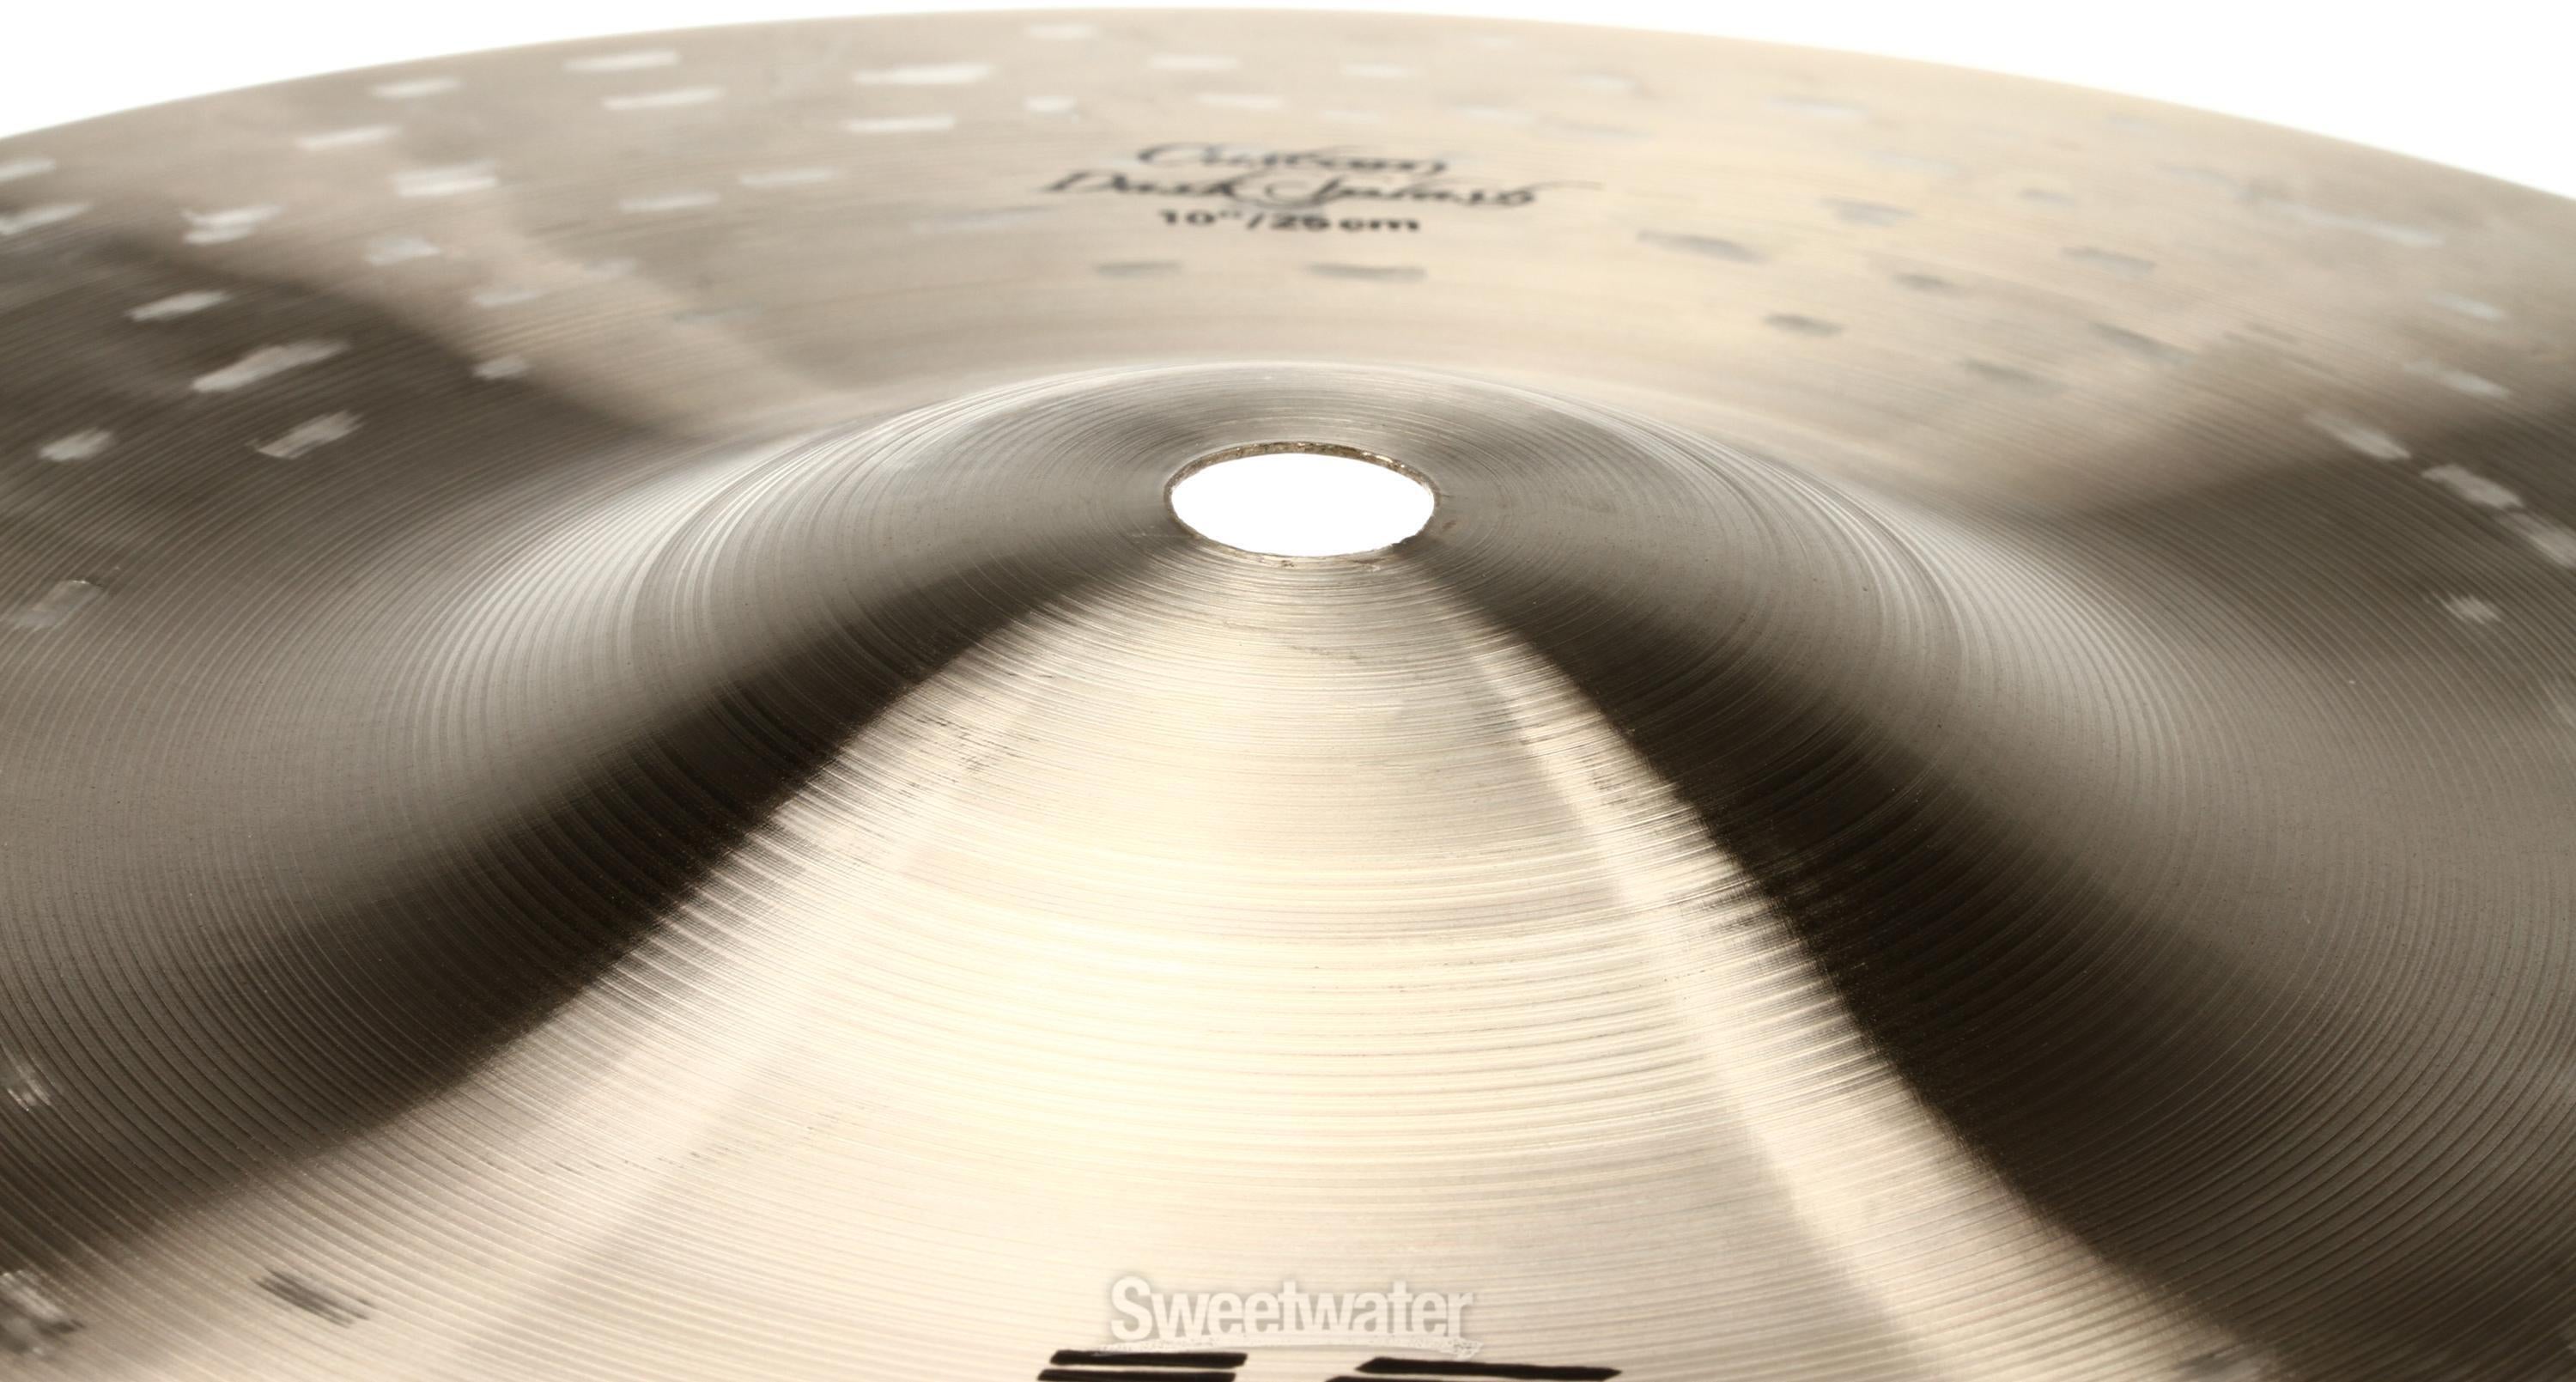 Zildjian 10 inch K Custom Dark Splash Cymbal